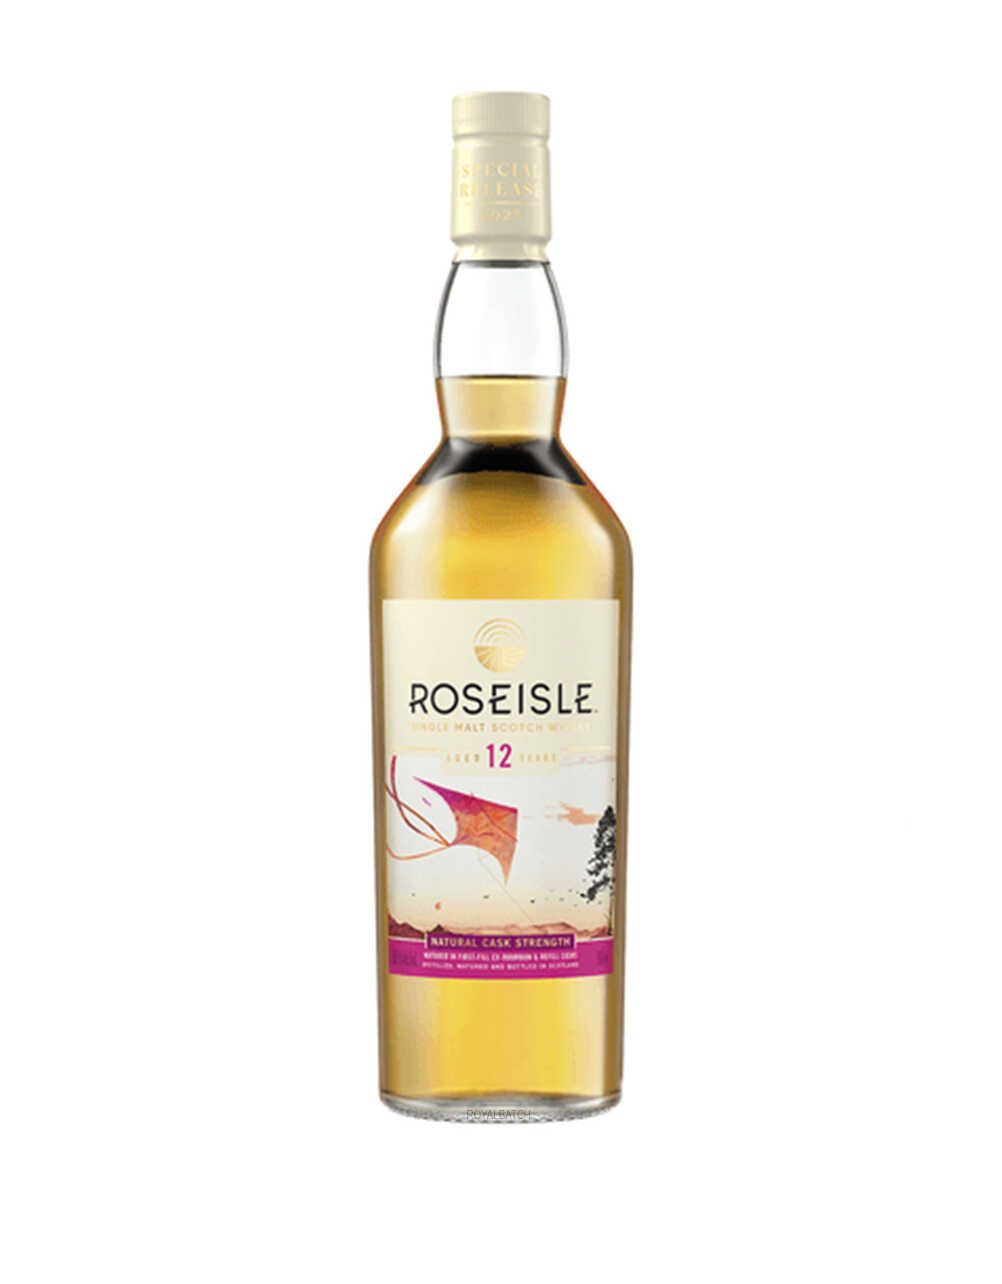 Roseisle The Origami Kite 12 Year Old Single Malt Scotch Whisky